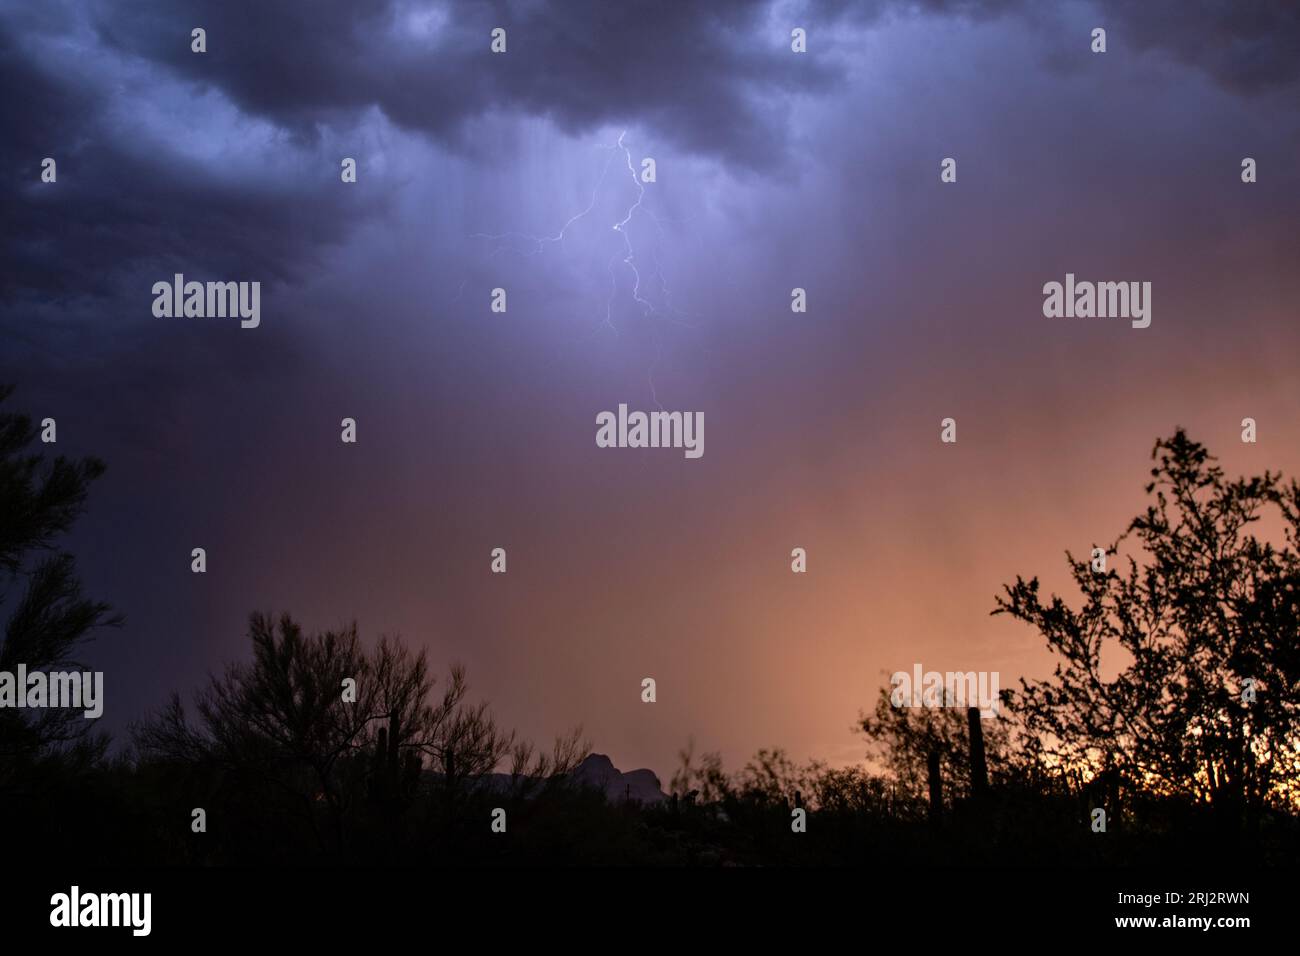 Sunset lightning illuminates clouds from within the monsoon storm Stock Photo